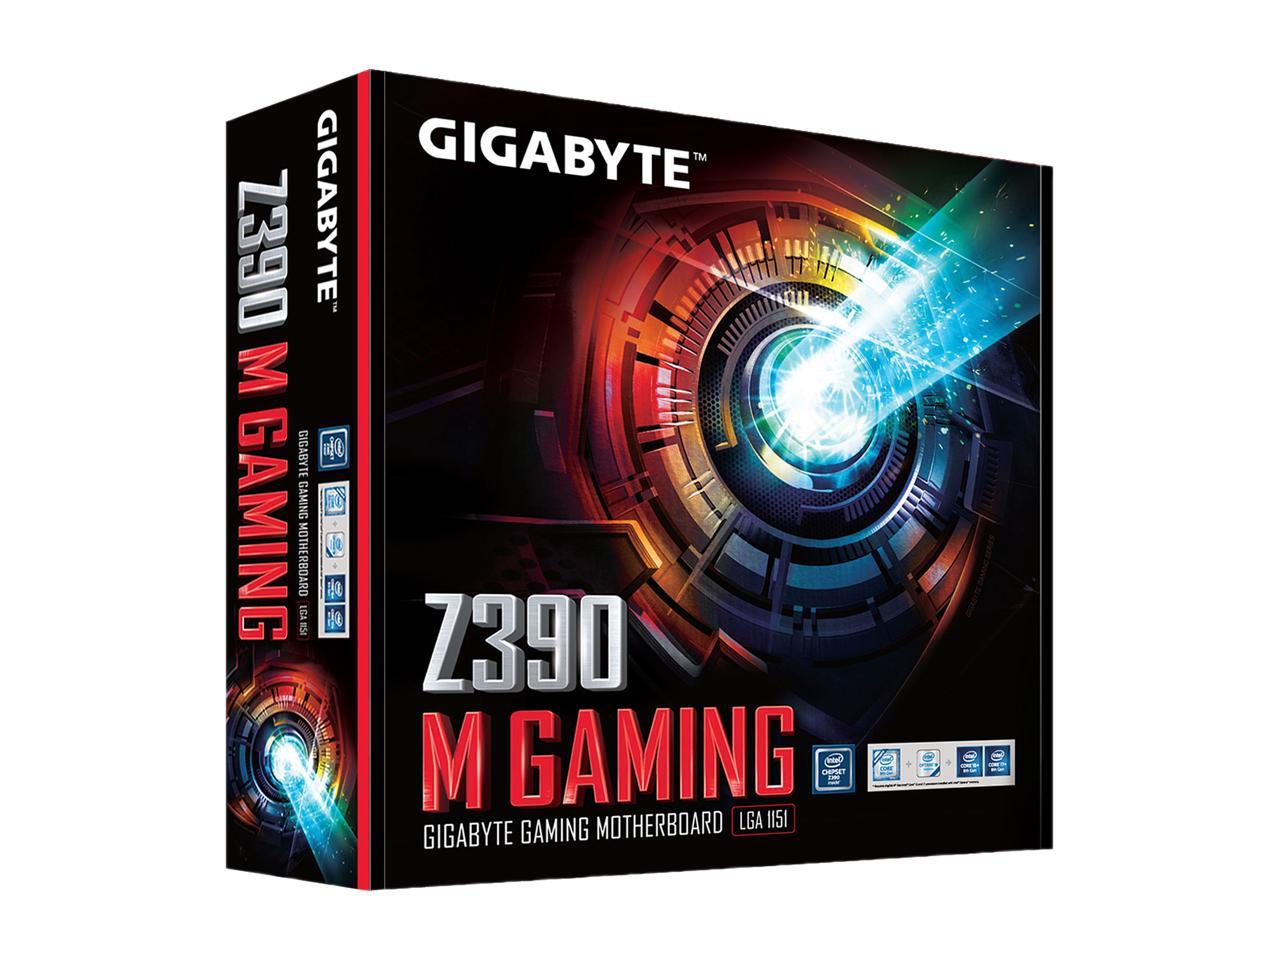 GIGABYTE Z390 M GAMING LGA 1151 (300 Series) Intel Z390 HDMI SATA 6Gb/s USB  3.1 Micro ATX Intel Motherboard